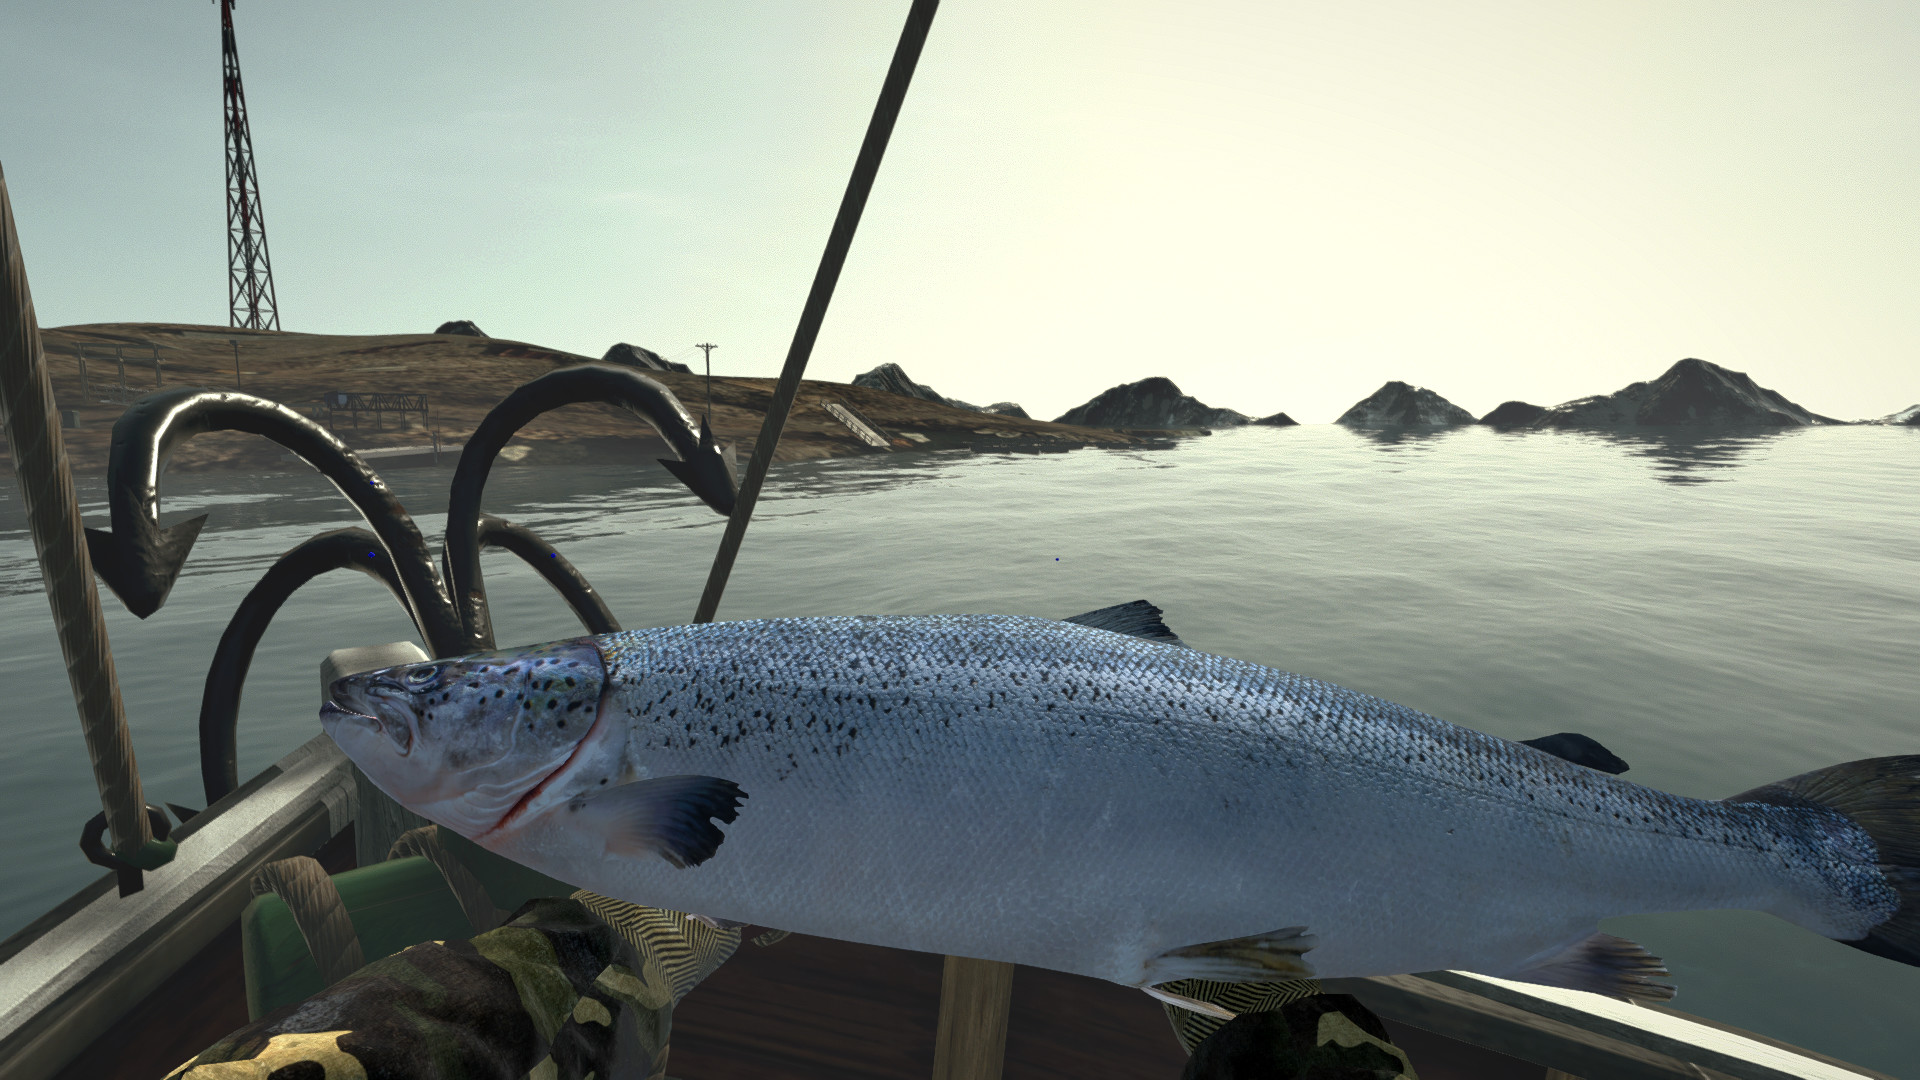 Ultimate Fishing Simulator - Greenland DLC Steam CD Key